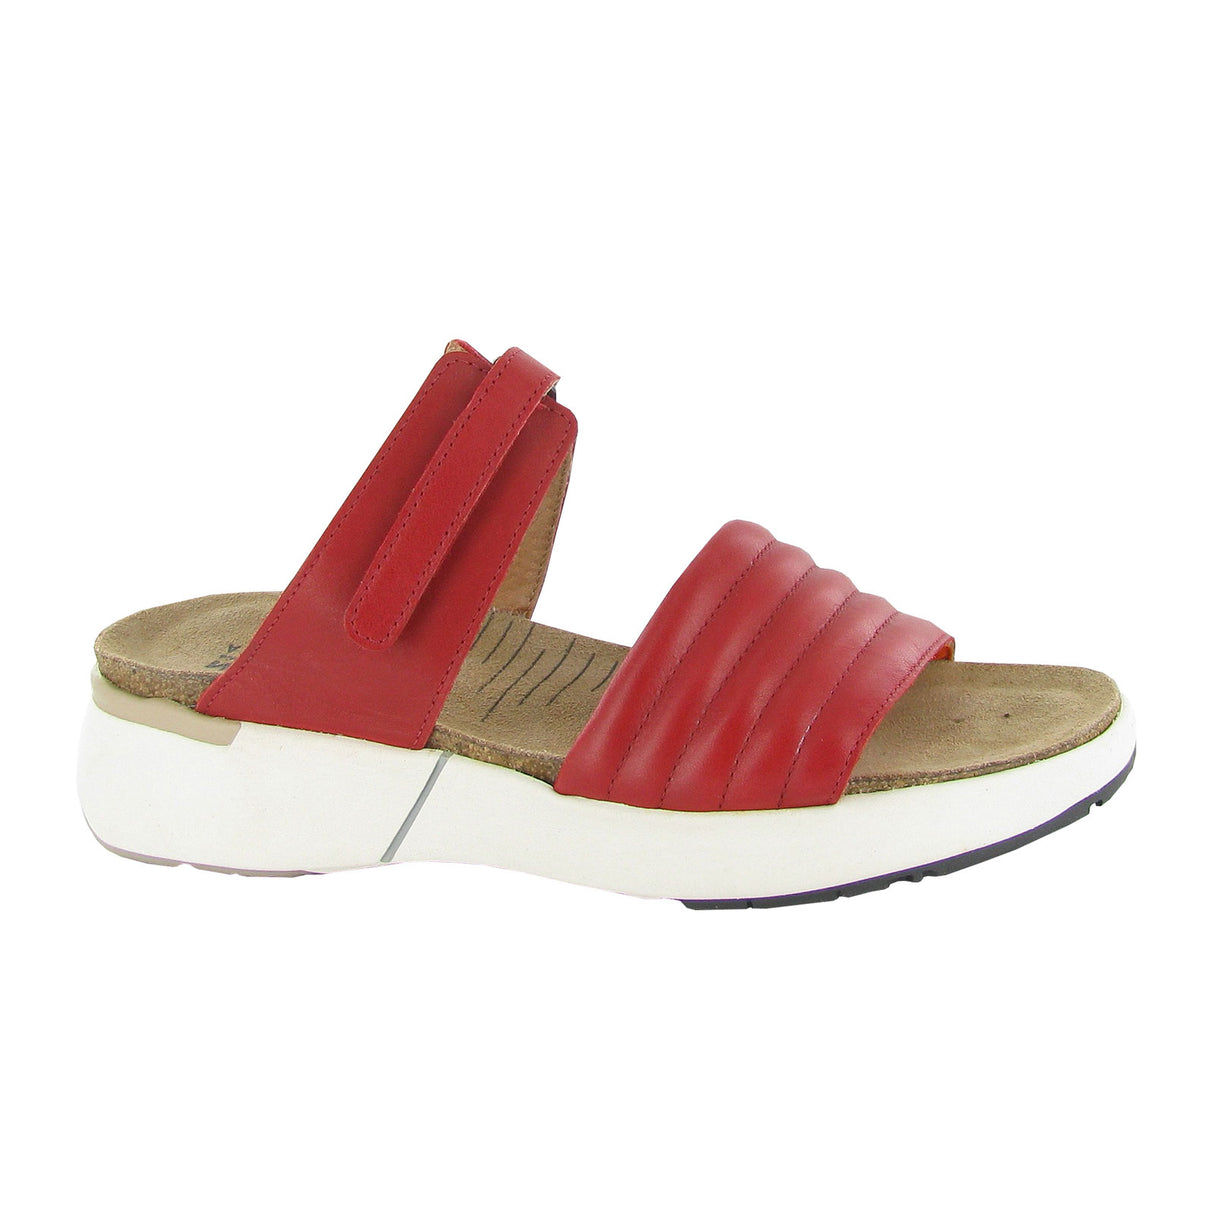 Naot Vesta Slide Sandal (Women) - Kiss Red Leather Sandals - Slide - The Heel Shoe Fitters